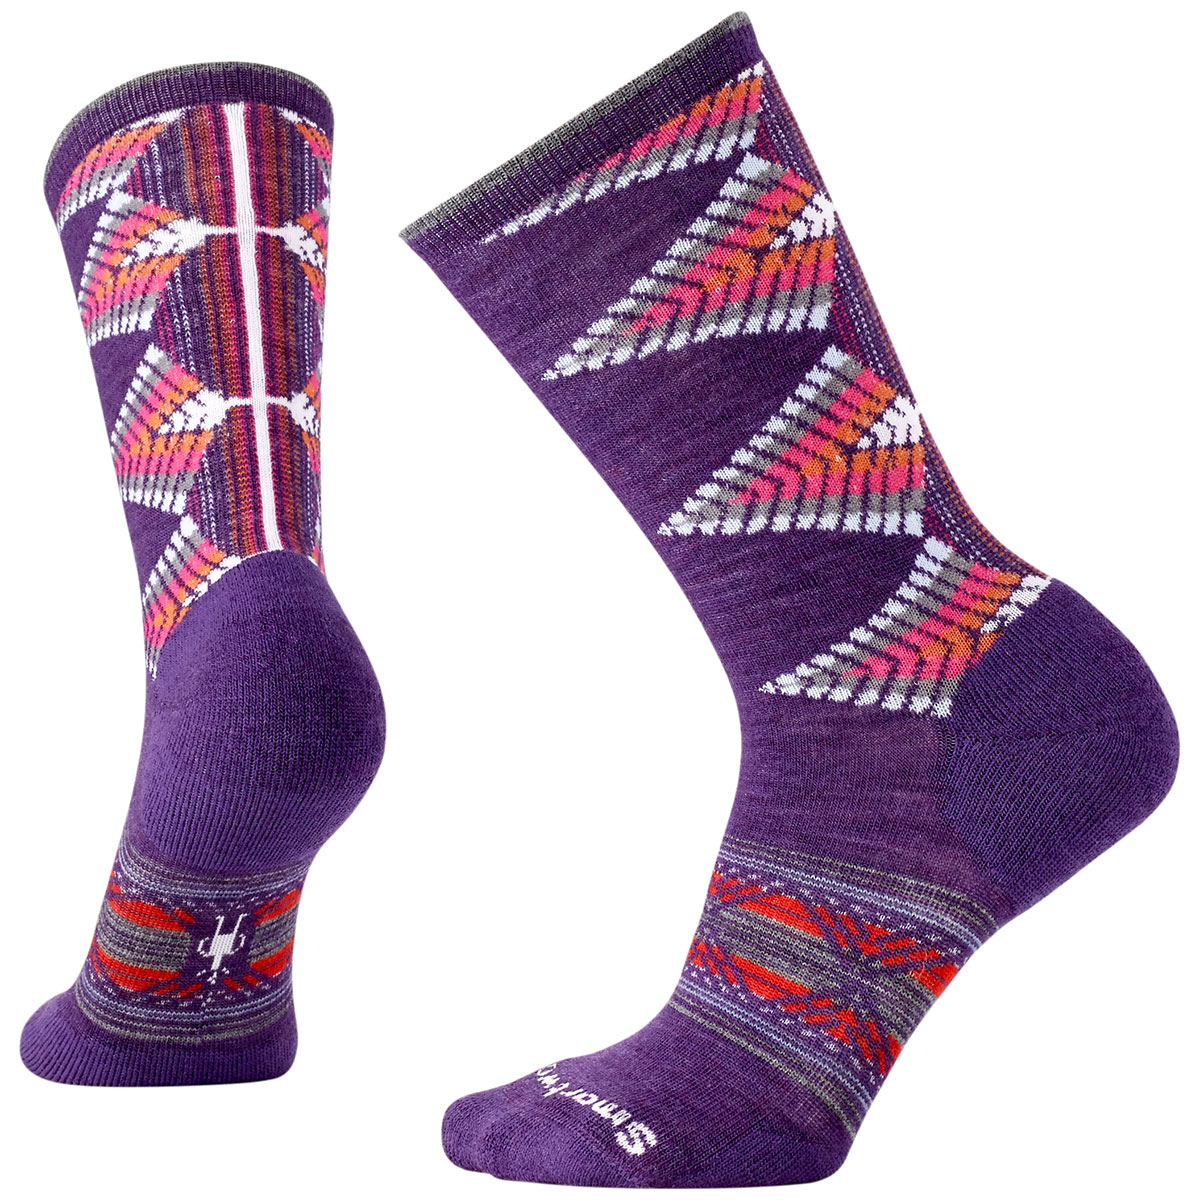 Smartwool Women's Tiva Crew Socks - Purple, M